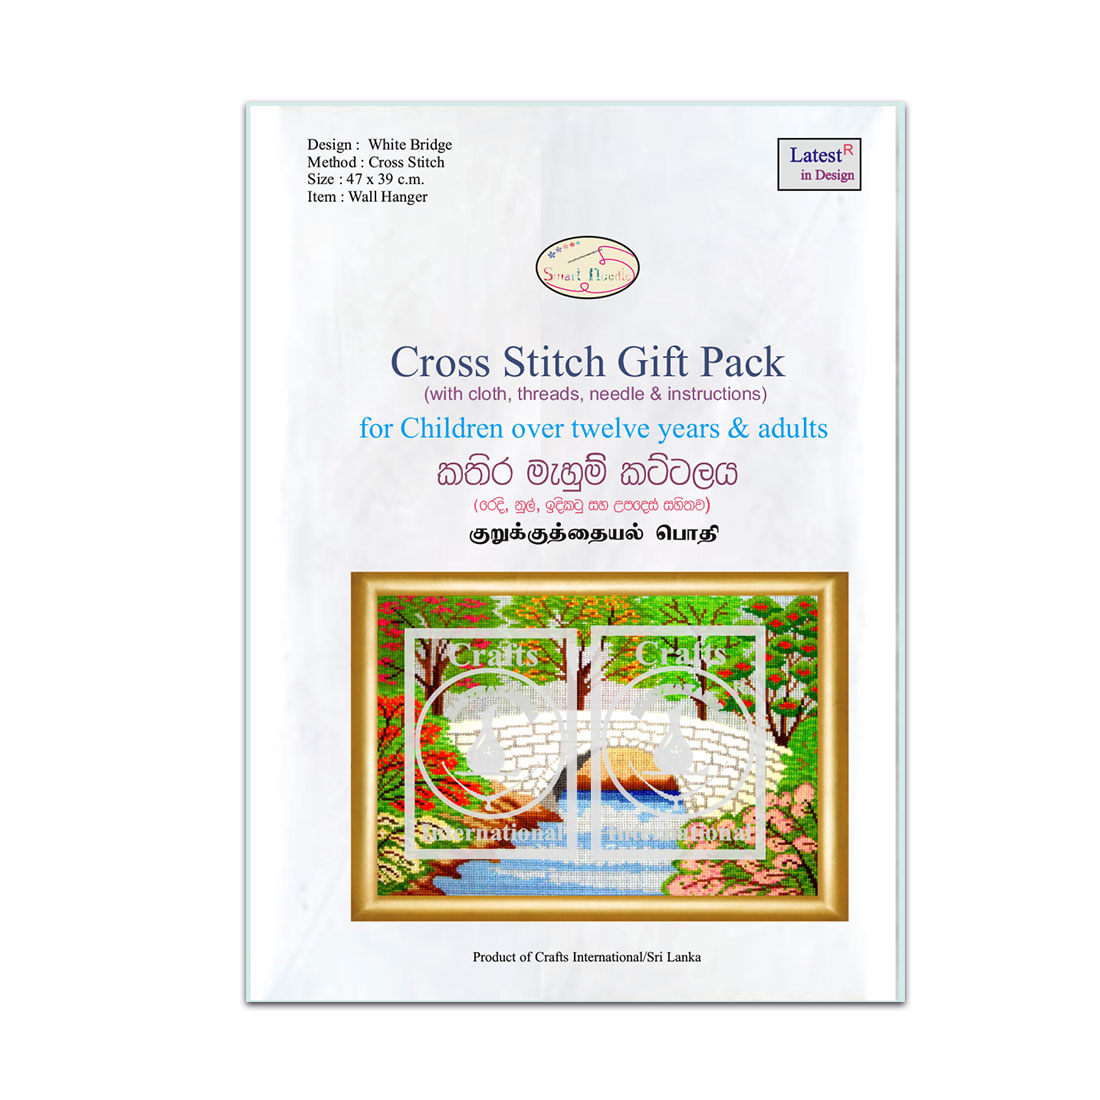 Cross Stitch Gift Pack - The White Bridge